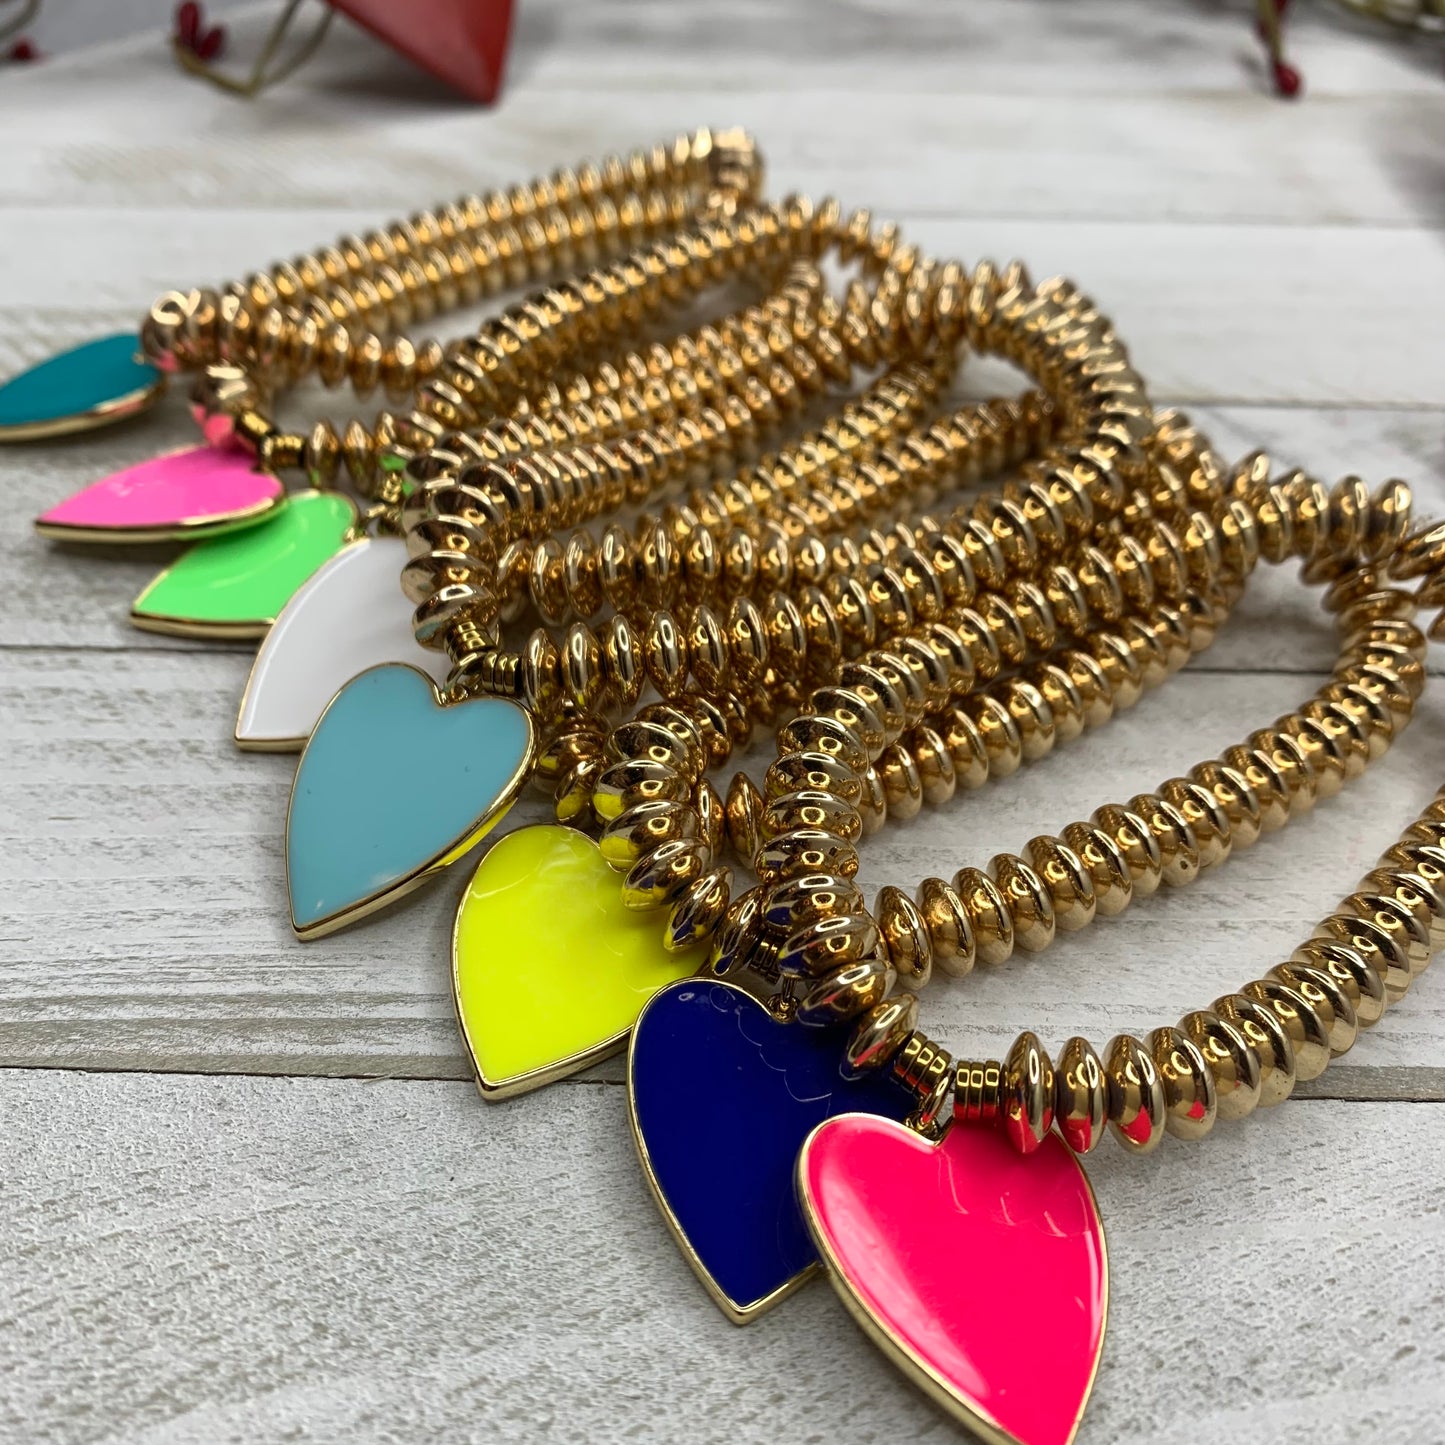 Erika Williner Designs - Be my Valentine Bracelets